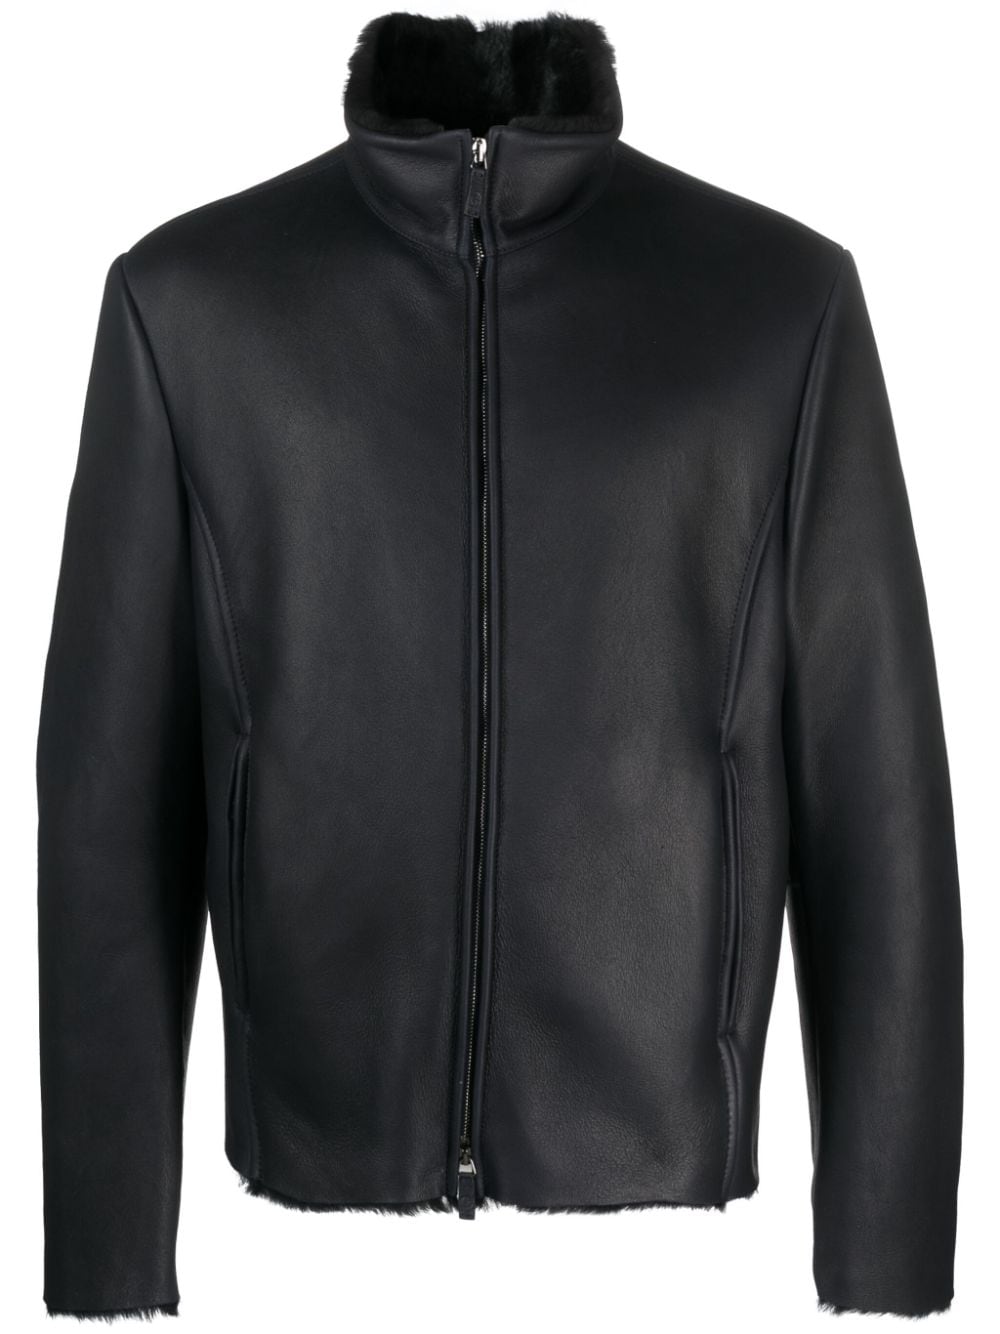 Giorgio Armani Leather Jackets for Men- Tags - WARDROB